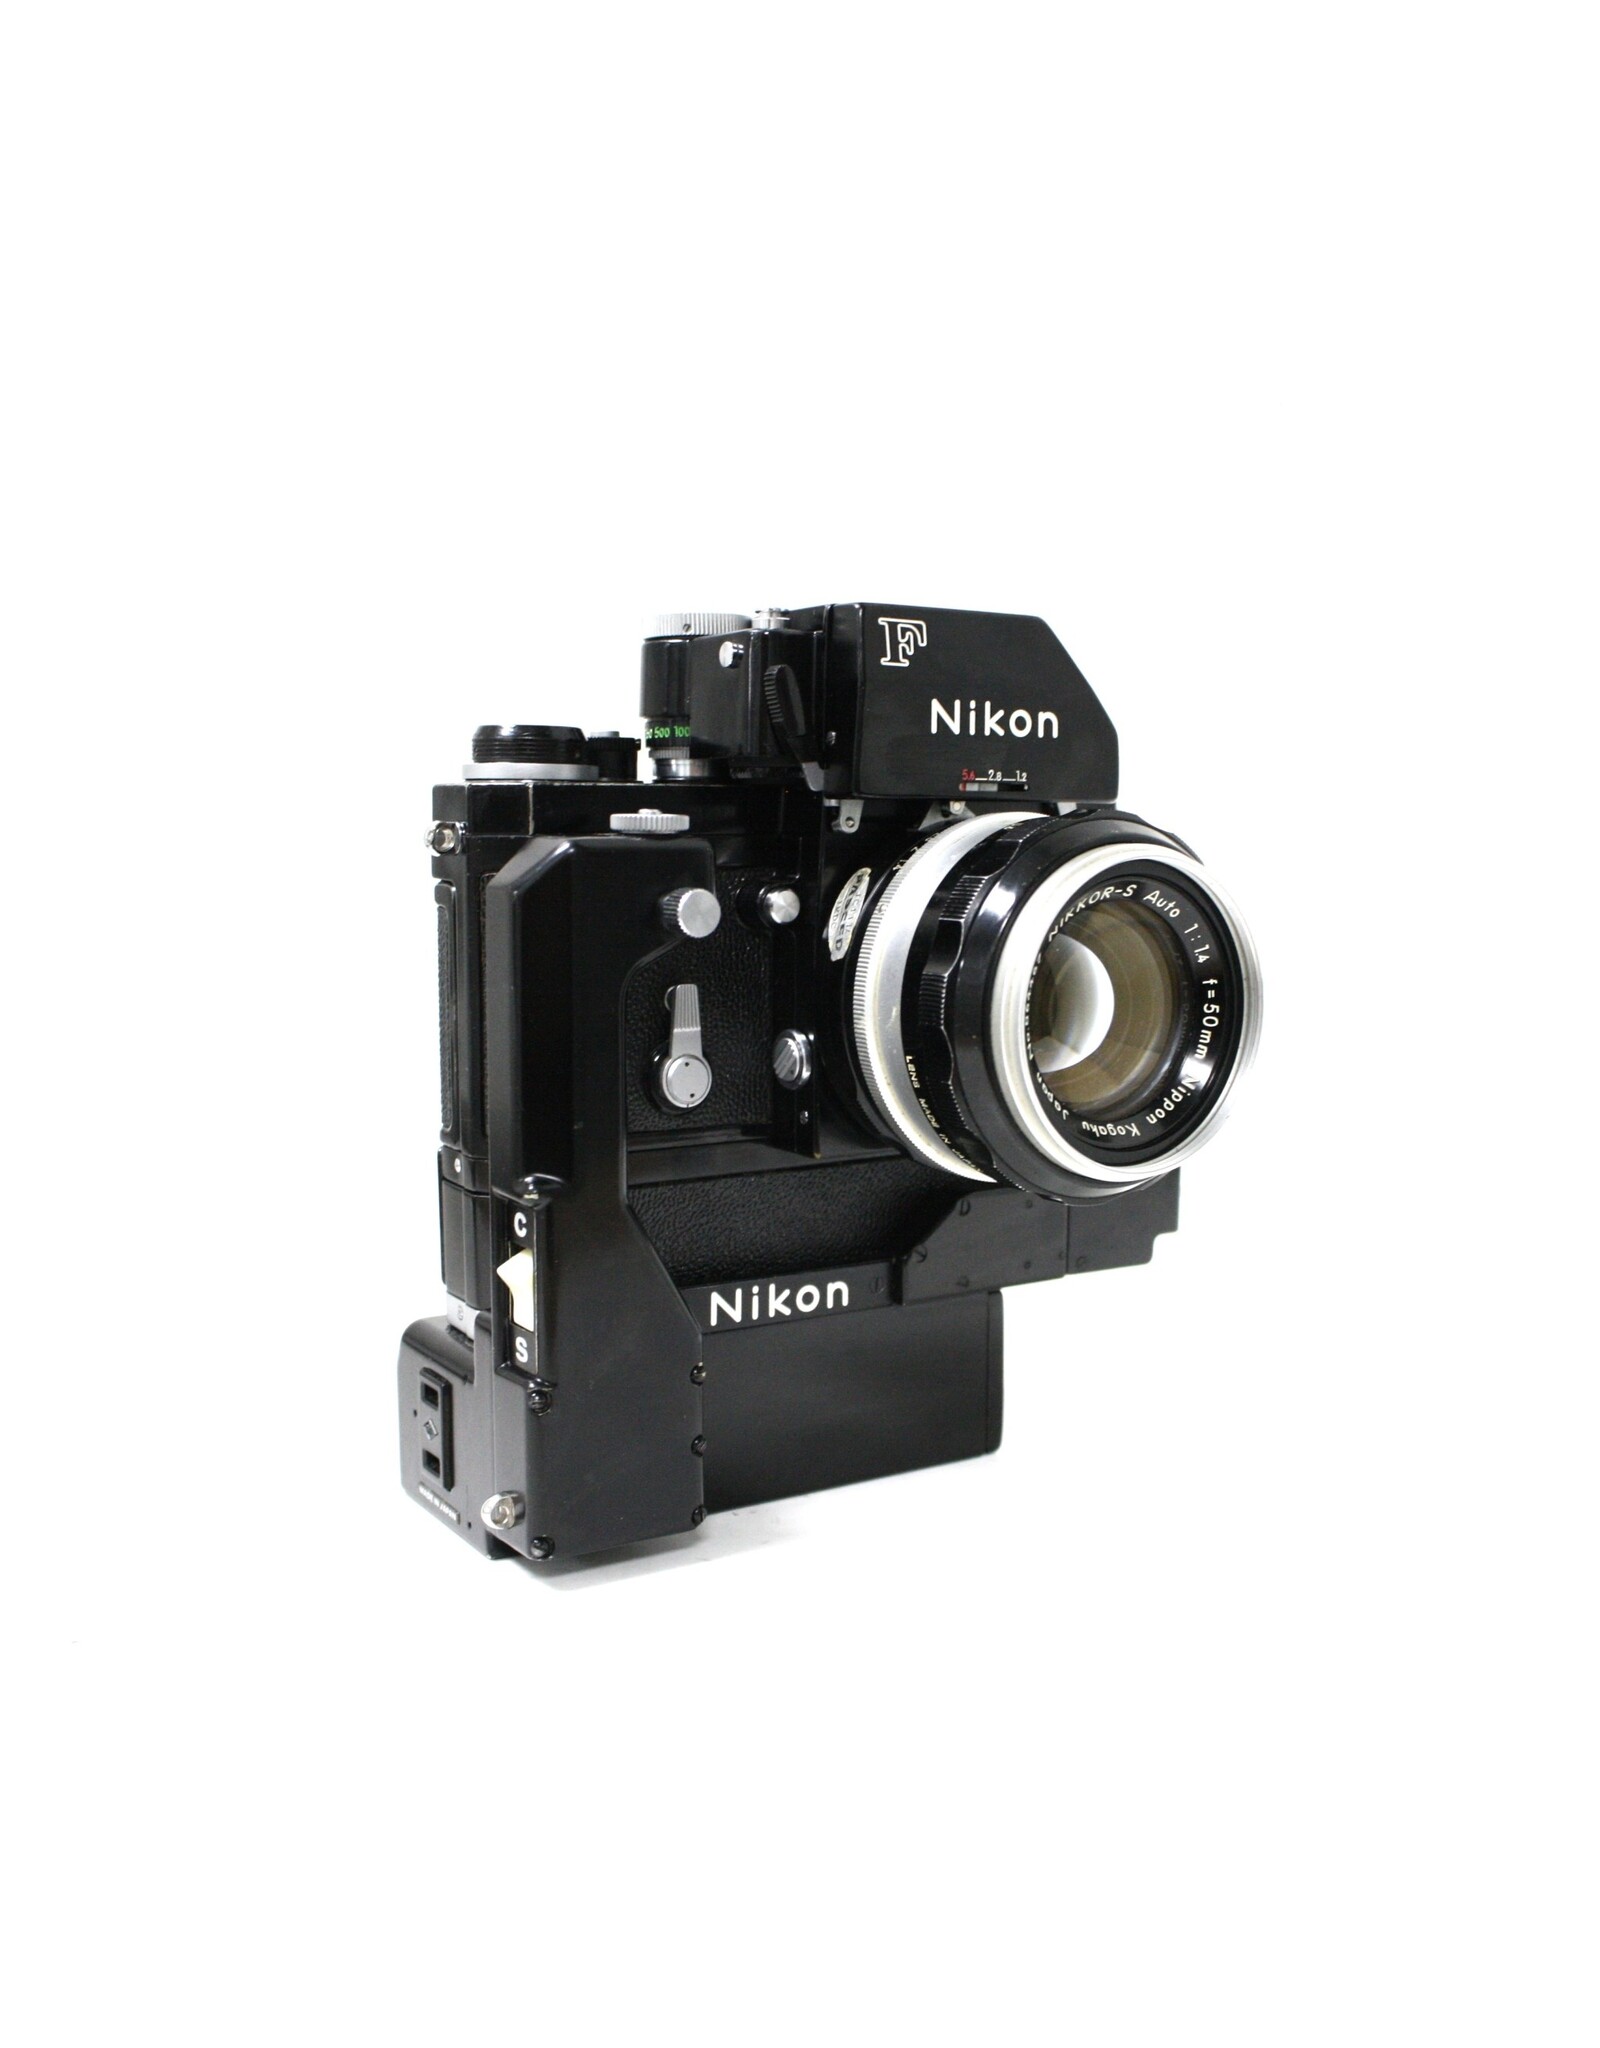 Nikon Nikon Photomic FTn BLACK with Nikon Auto Rewind Stop Back  & 50mm 1.4 Lens (Pre-Owned)